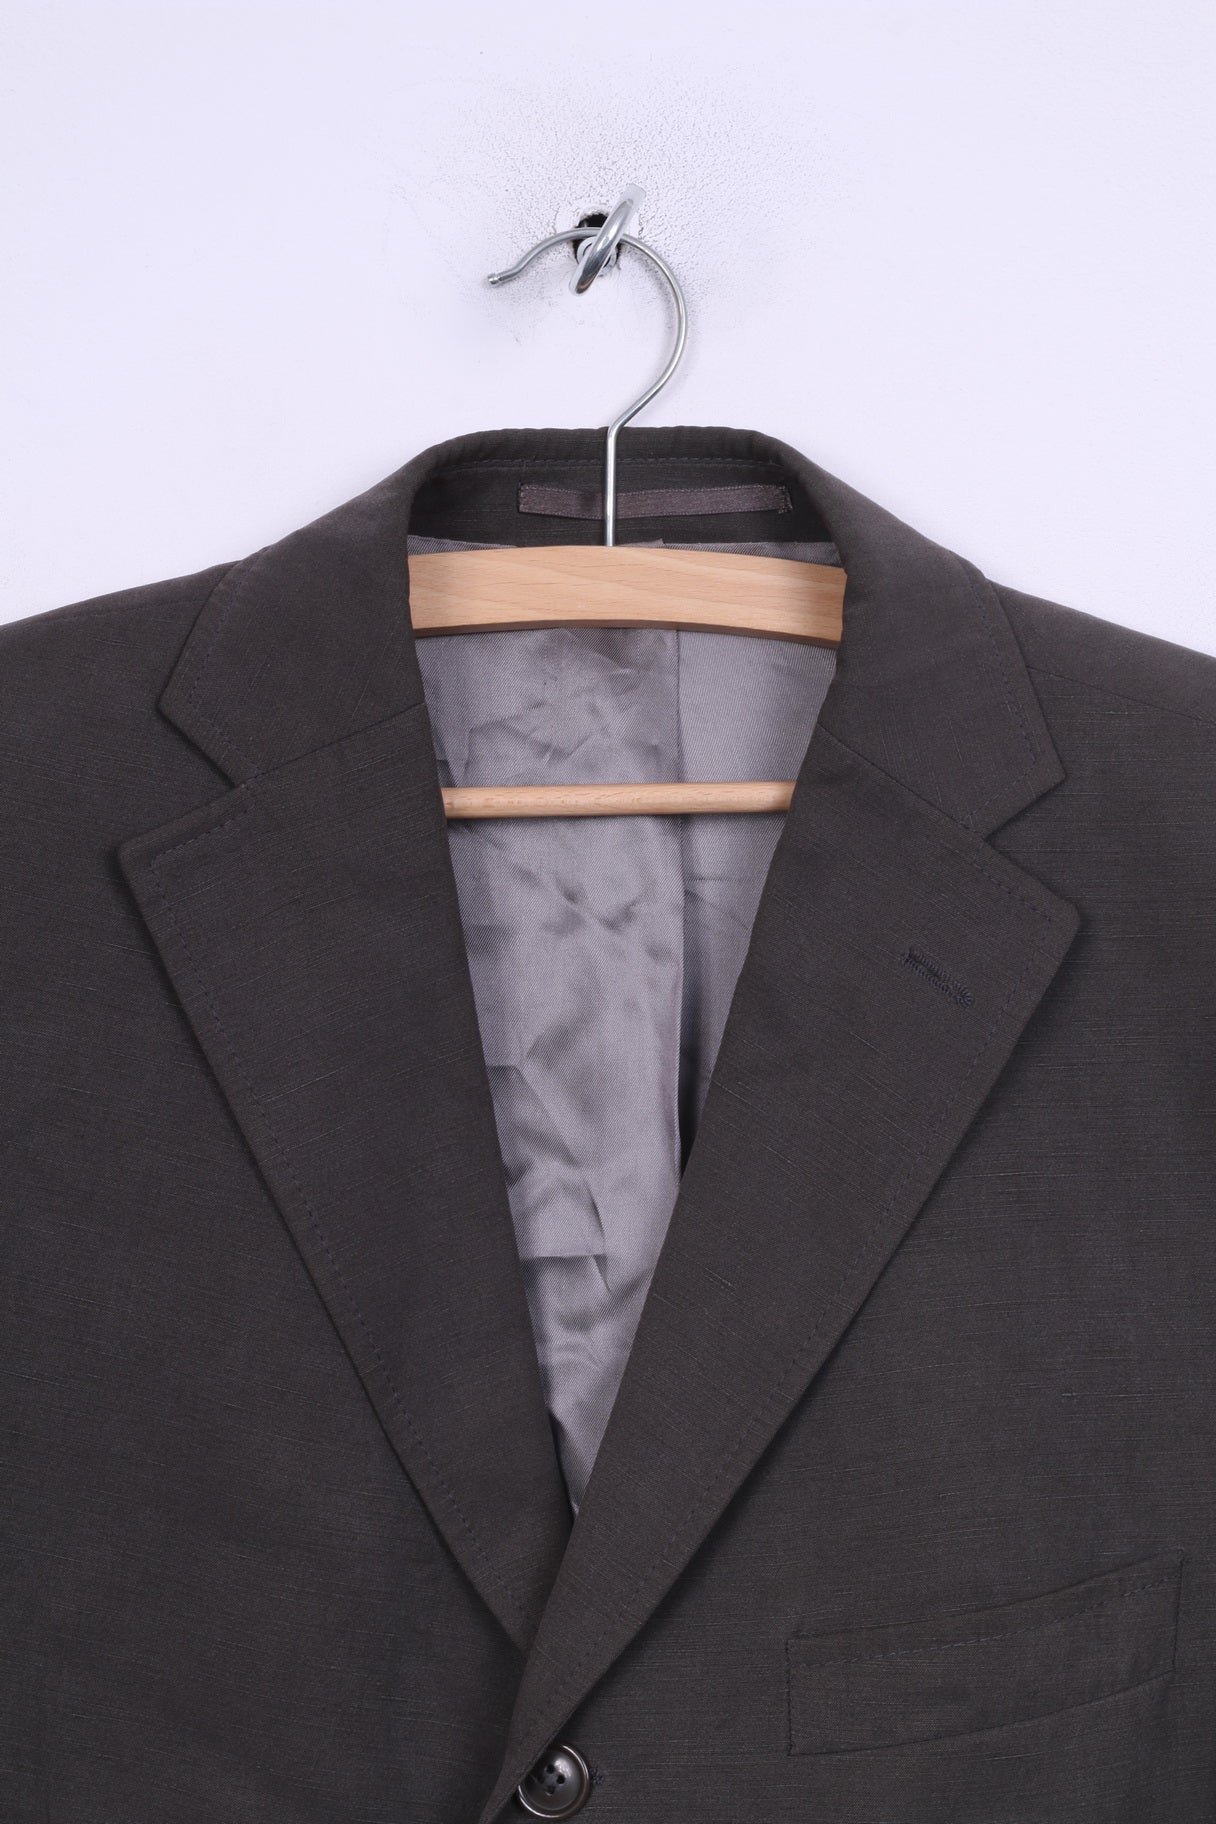 Pierre Cardin Mens 42 M Blazer Jacket Grey Single Breasted Shoulder Pads